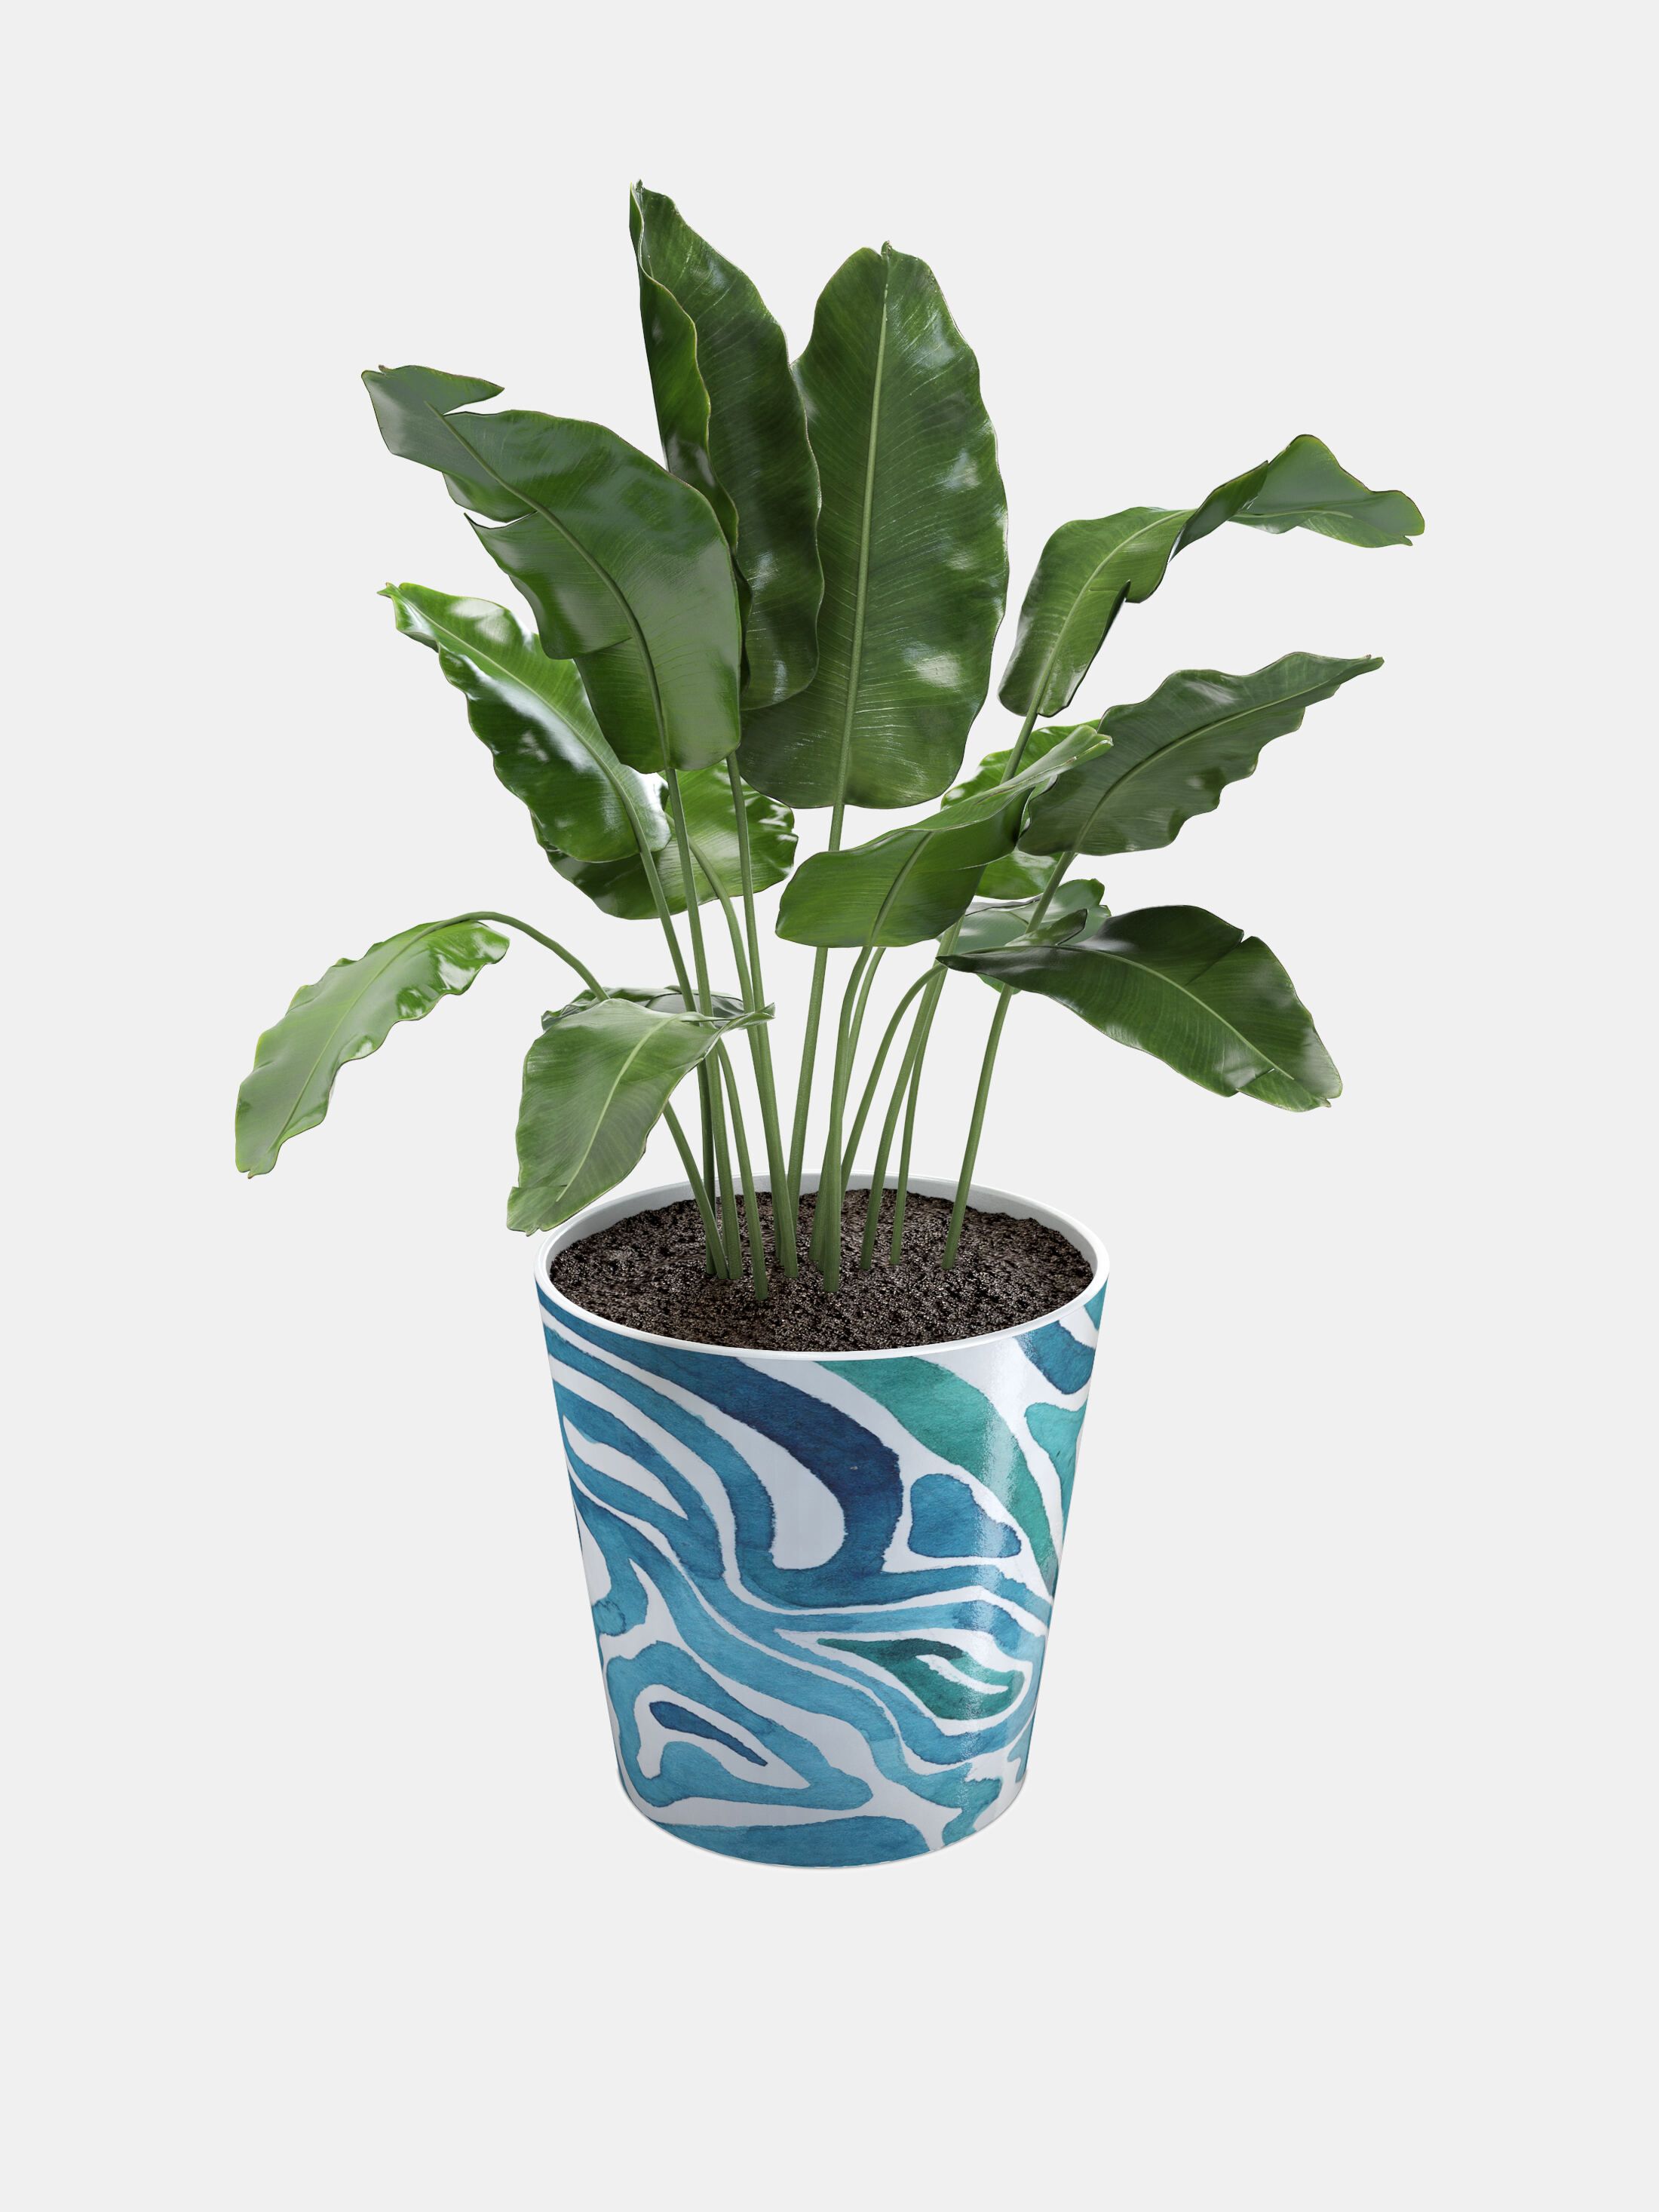 Custom Plant Pots  Create Personalized Flower Pots